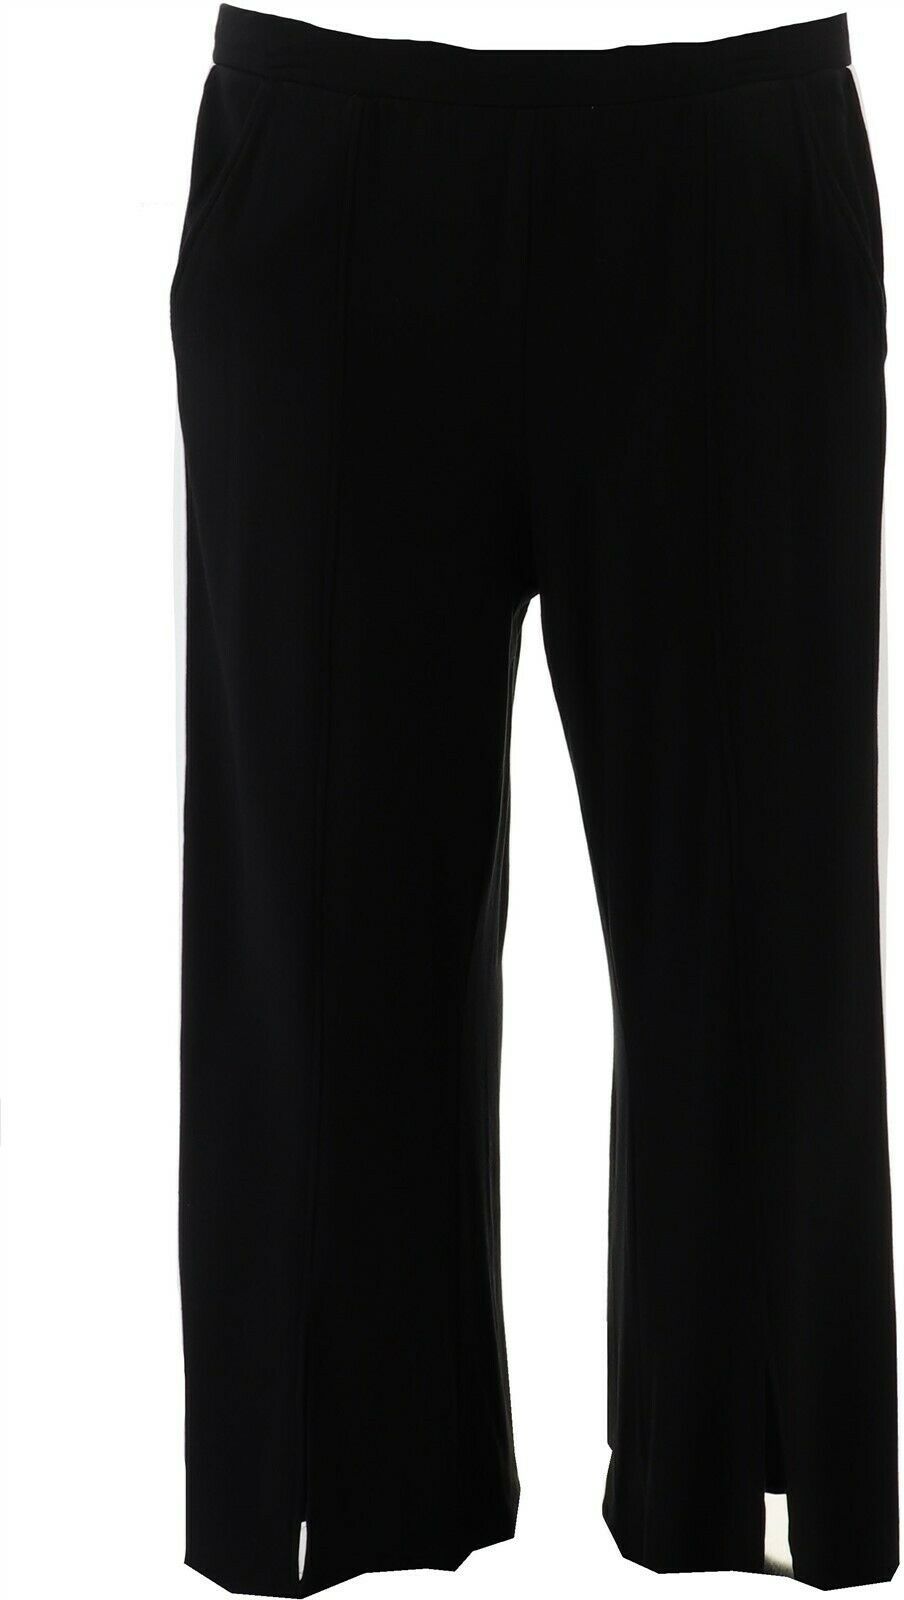 Tracy Anderson GILI Petite Wide Leg Knit Pants Noir Black PXL NEW A374968